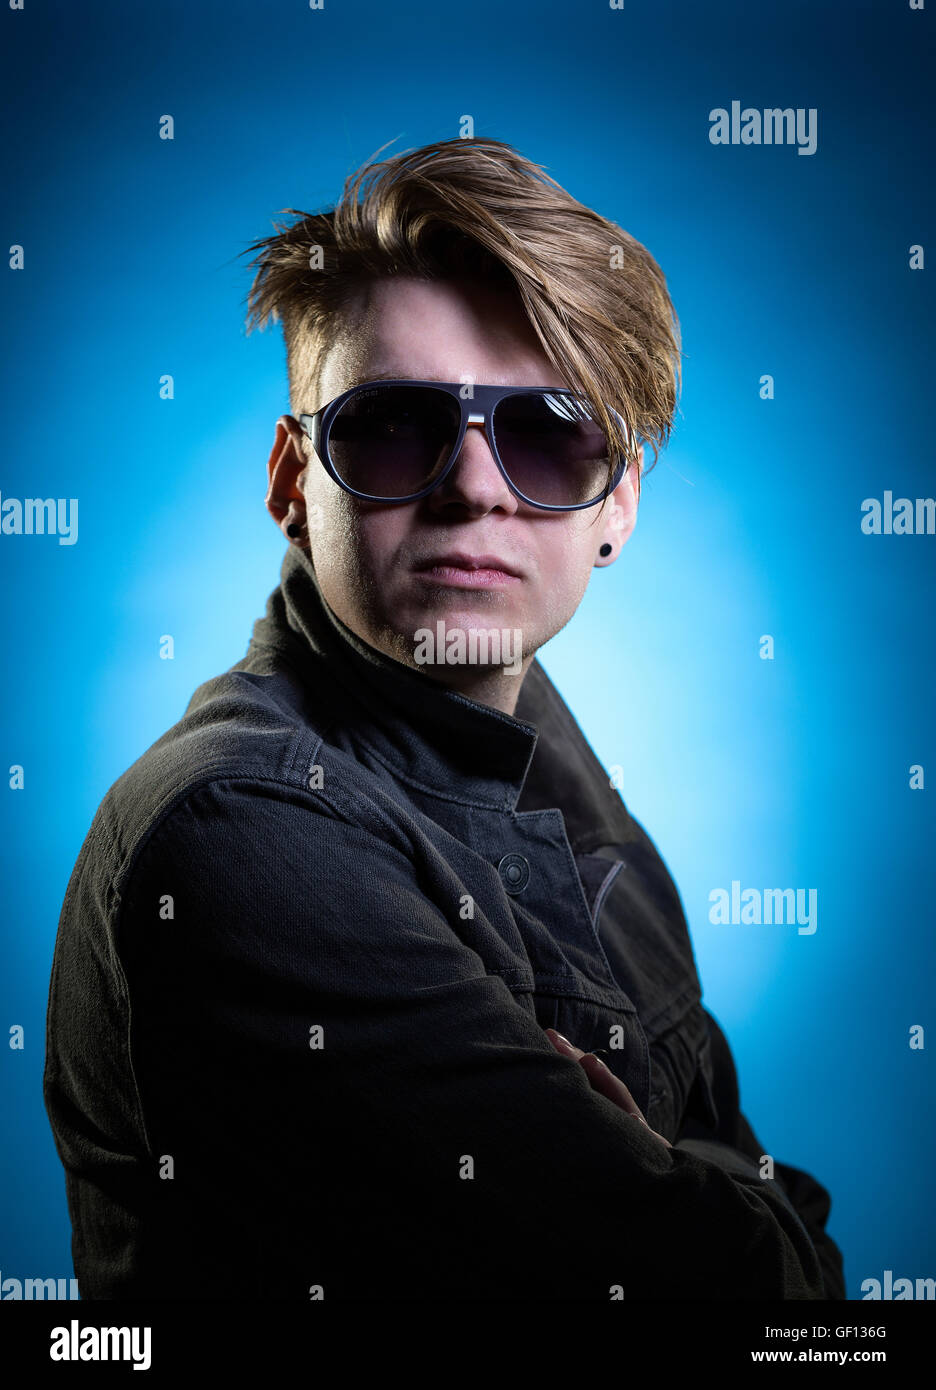 Male model portrait, sunglasses, hair, styling, fashion, blue background Stock Photo